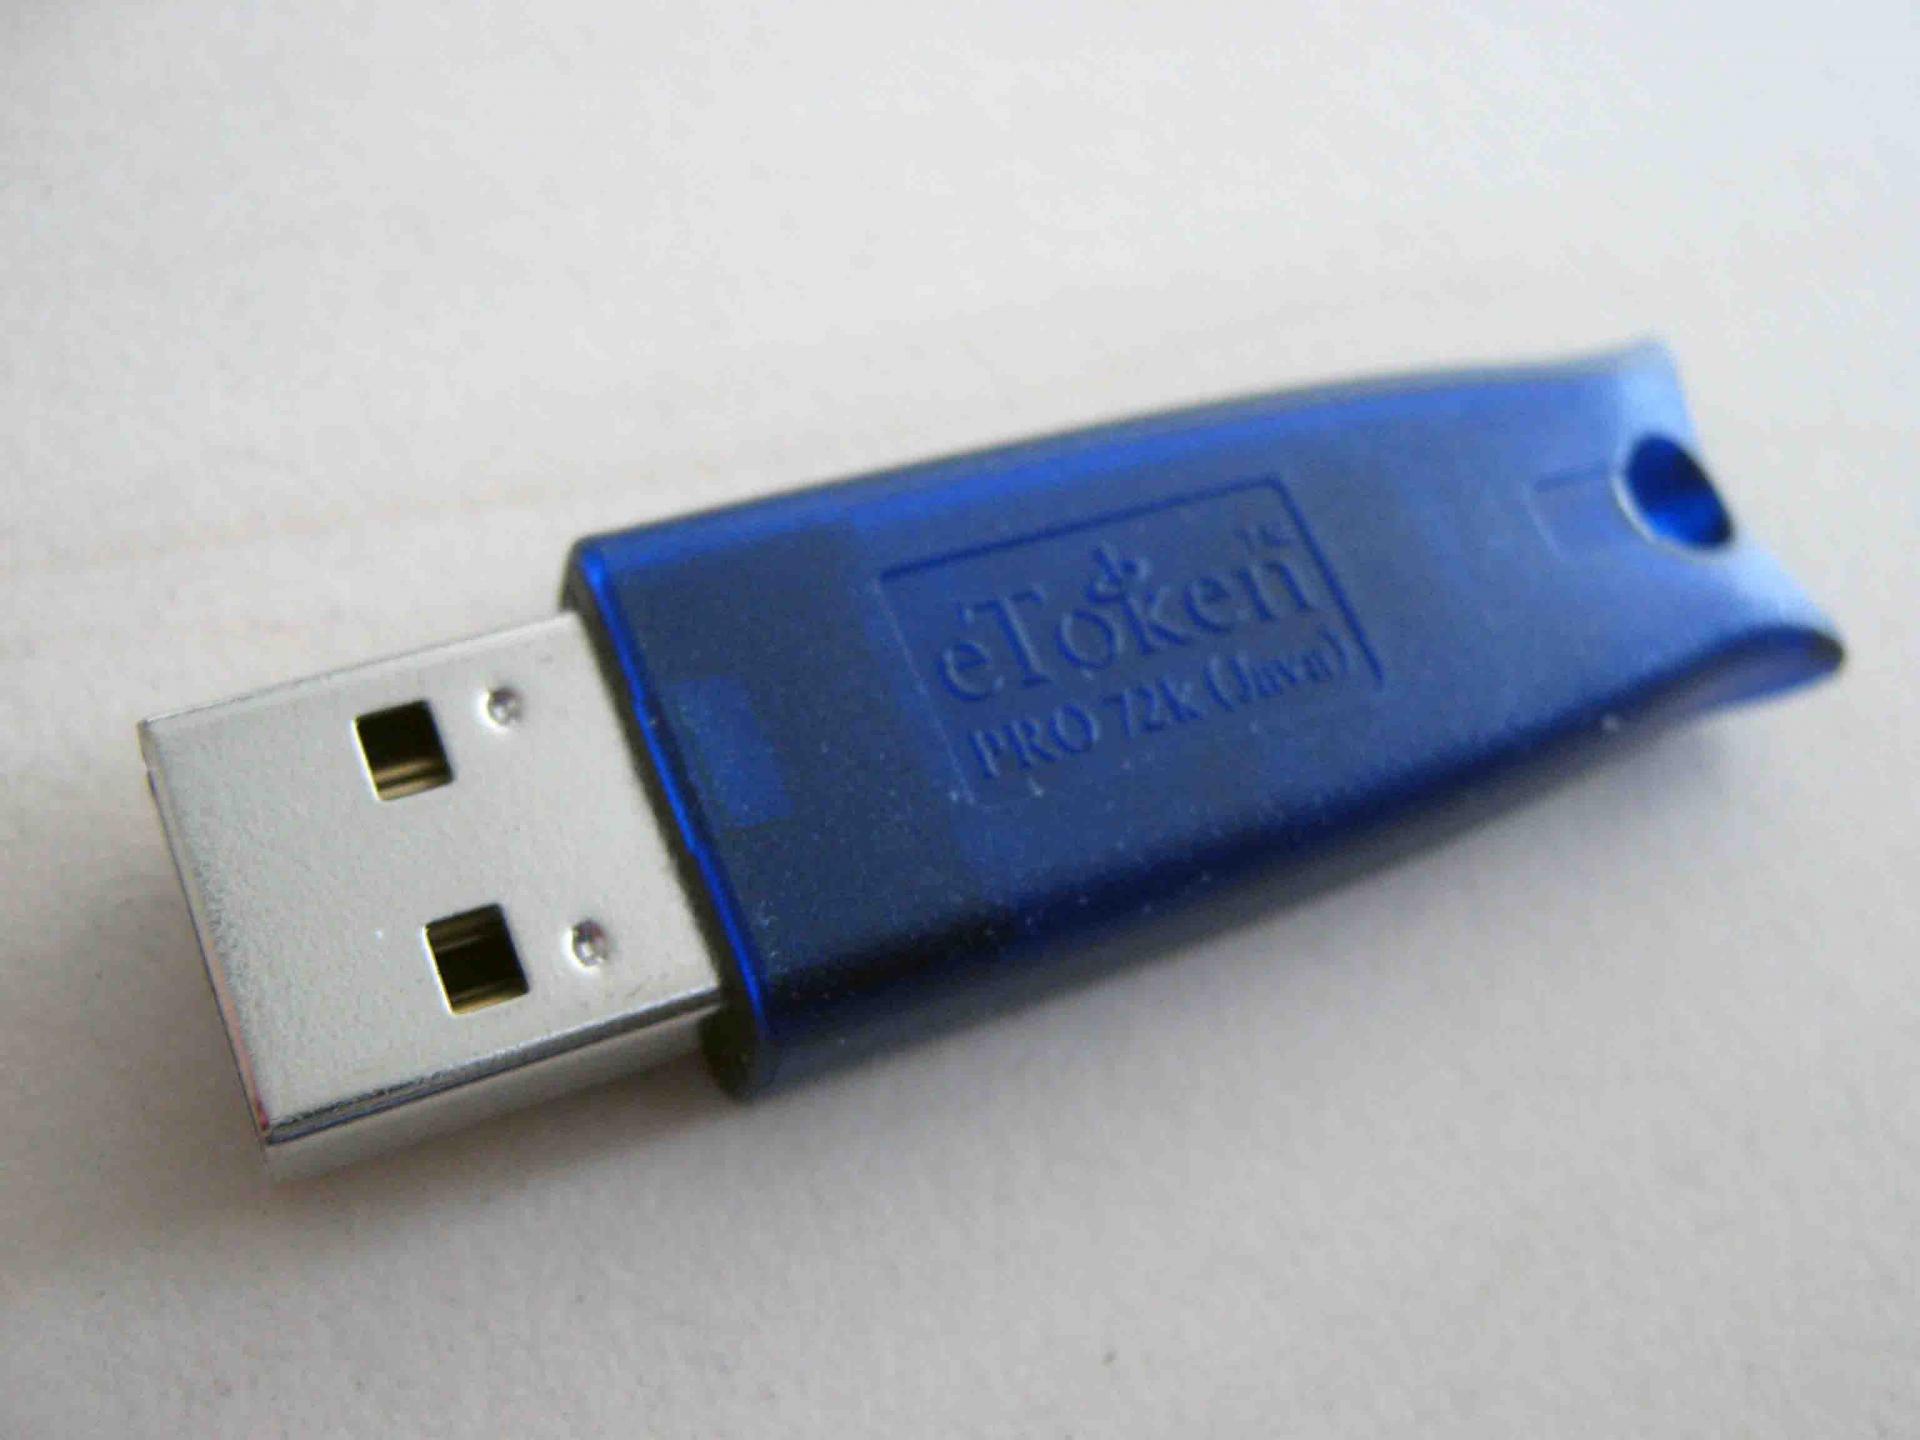 Sca токен. USB-ключ ETOKEN Pro (java), 72кб. ETOKEN e0231b113. ETOKEN 5205. USB-ключ ETOKEN Pro алладин.